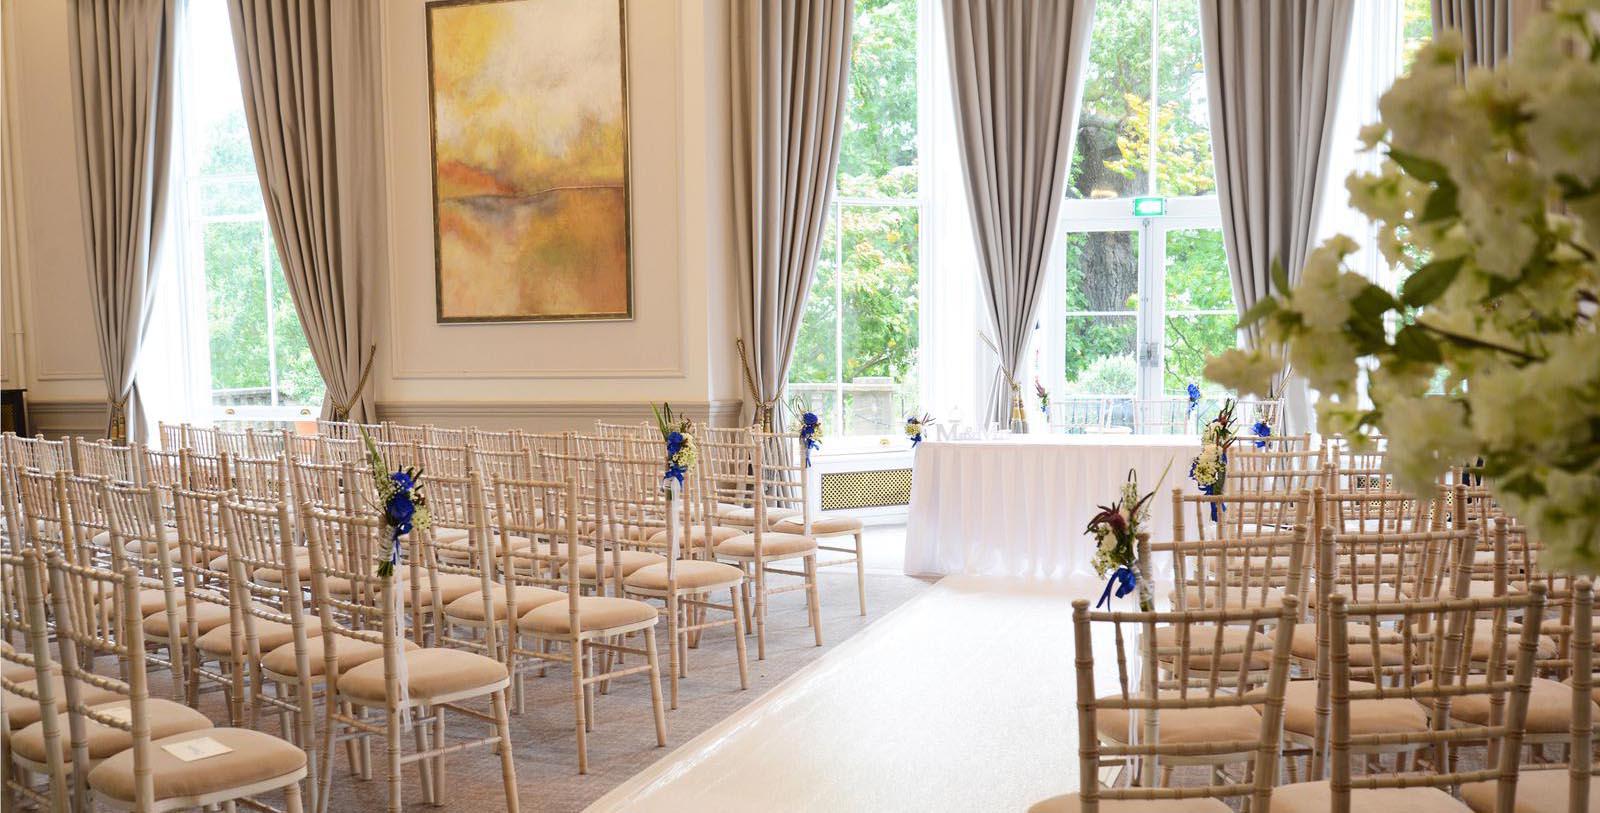 Image of Wedding Ceremony Oatlands Park Hotel Weybridge United Kingdom, Request for Proposal